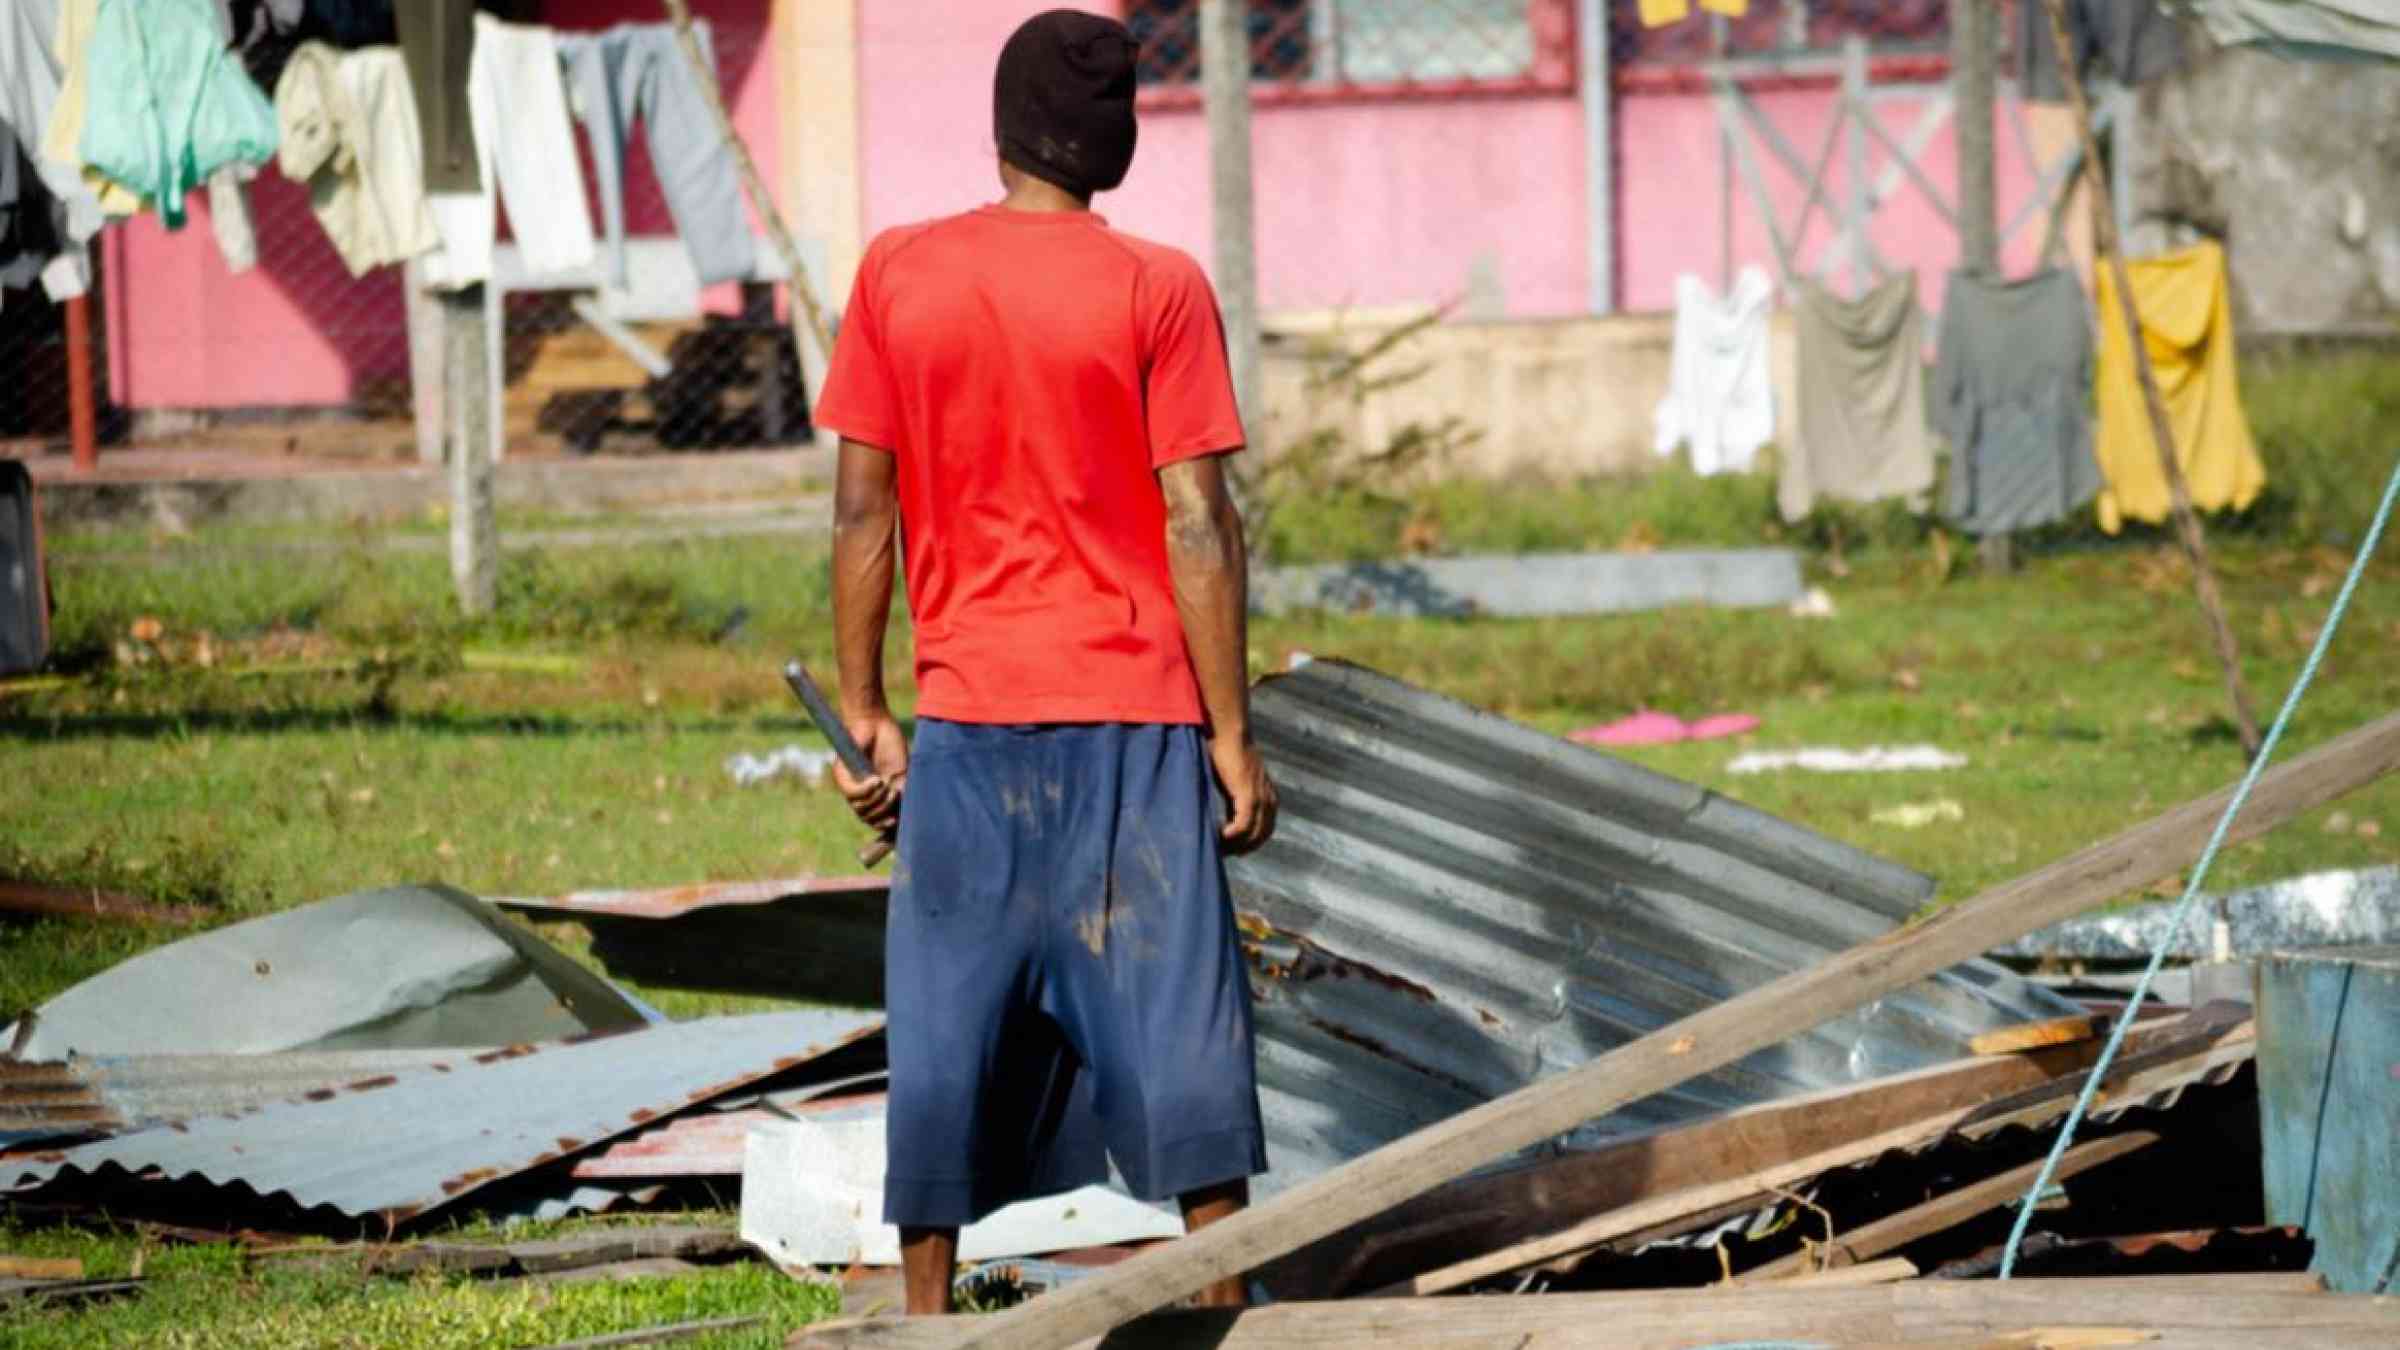 The impact of Hurricane Eta in Nicaragua, November 2020. Jeiner Andres HP/Shutterstock